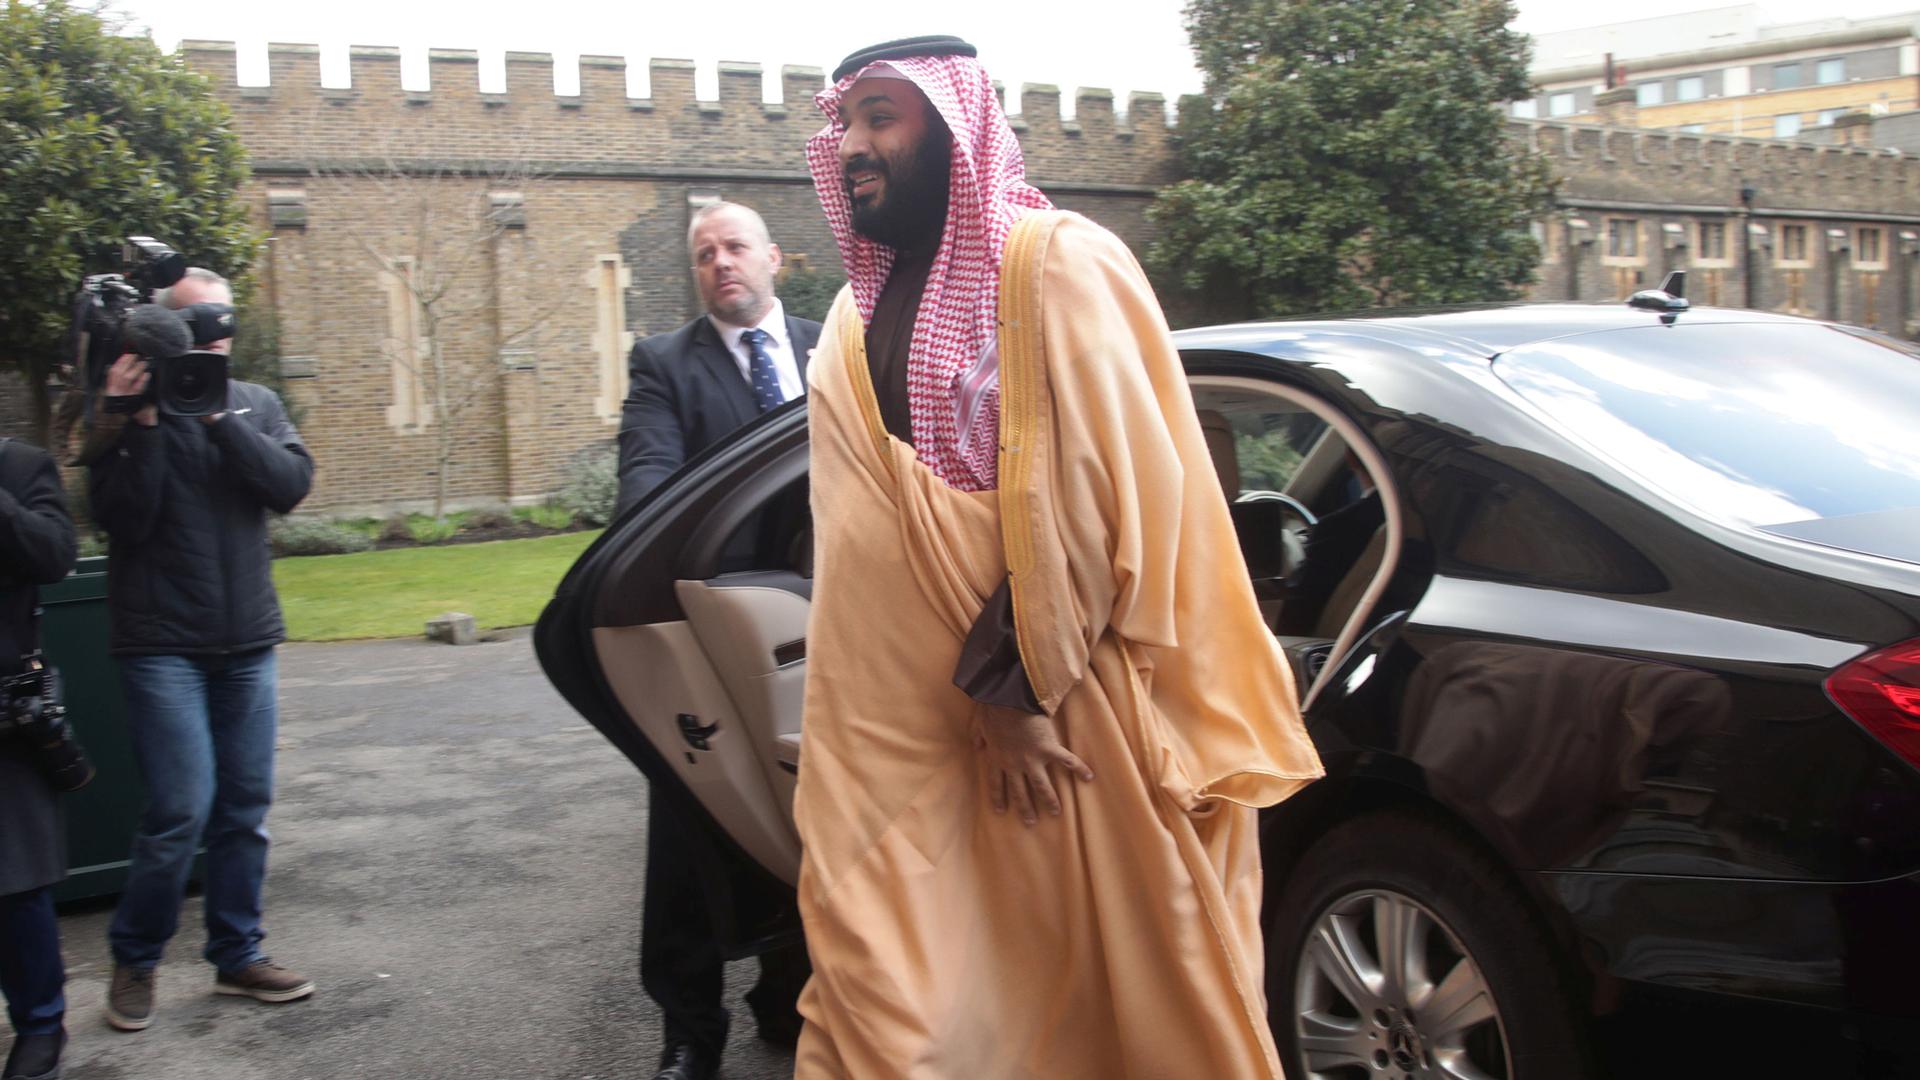 The Crown Prince of Saudi Arabia Mohammed bin Salman walks from a black car toward Lambeth Palace, London.